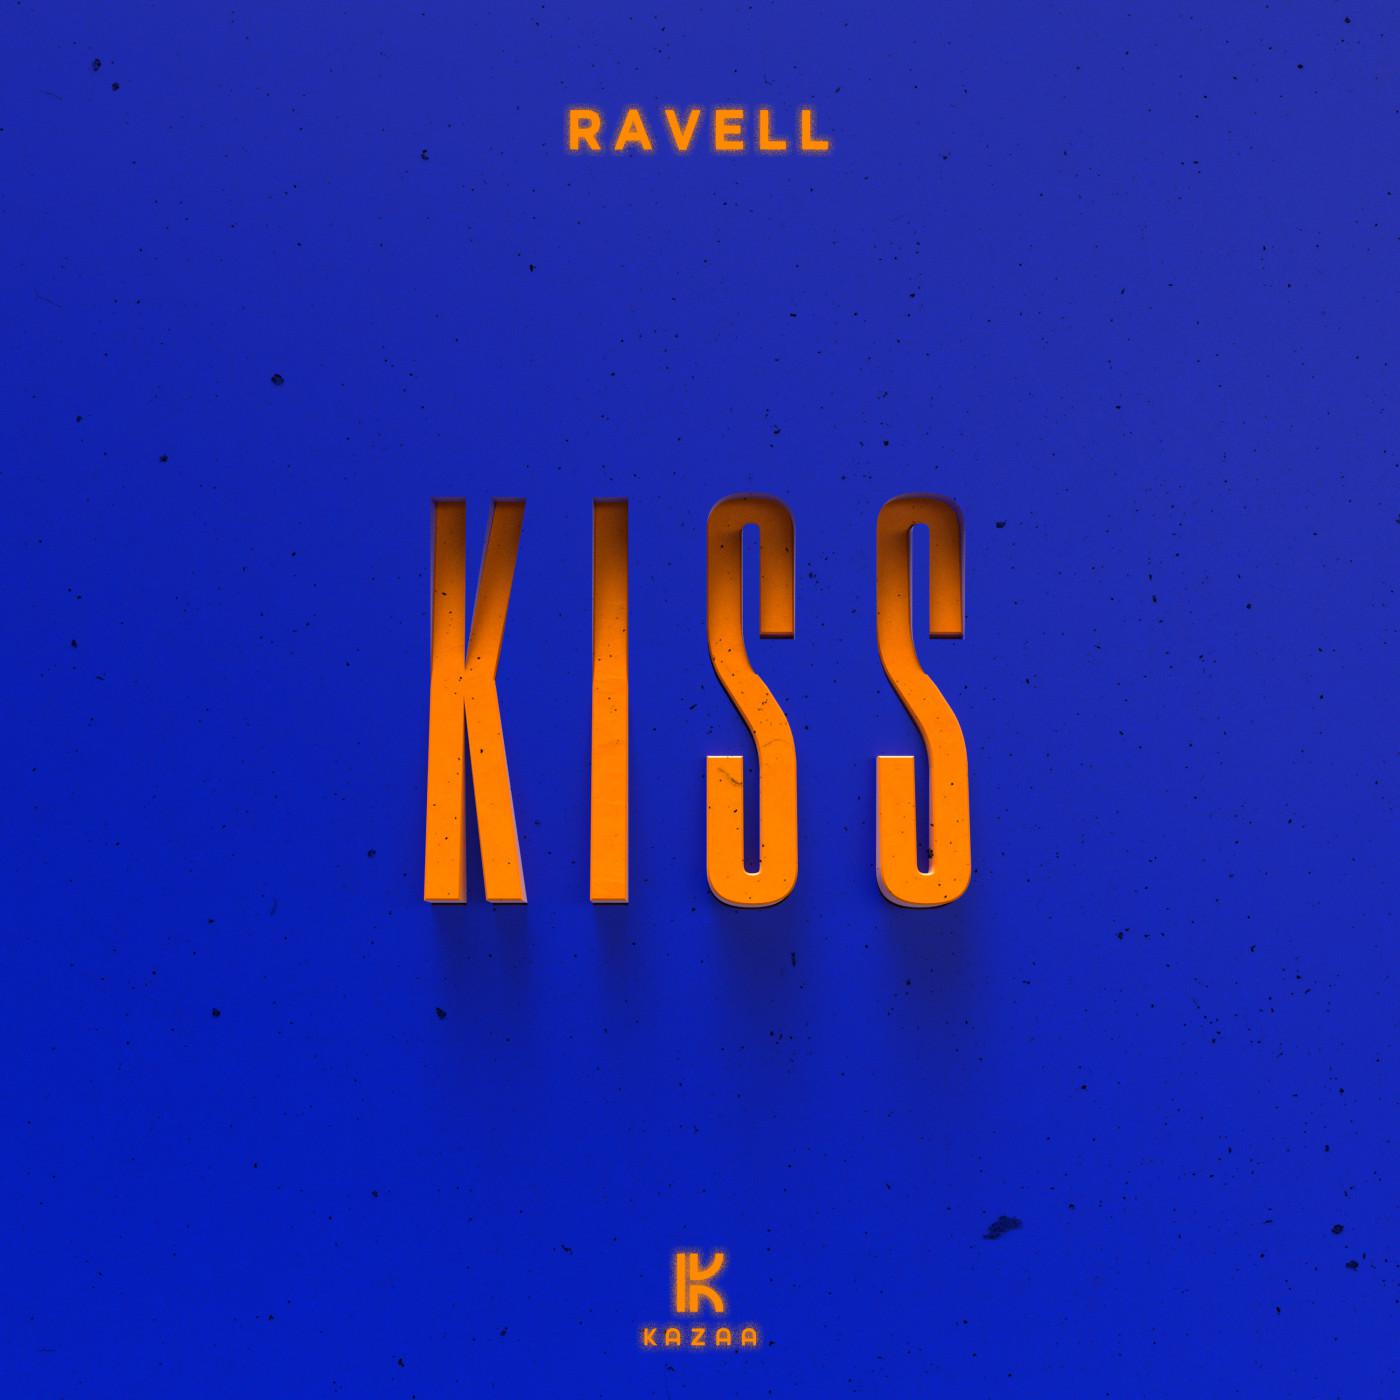 Ravell - Kiss